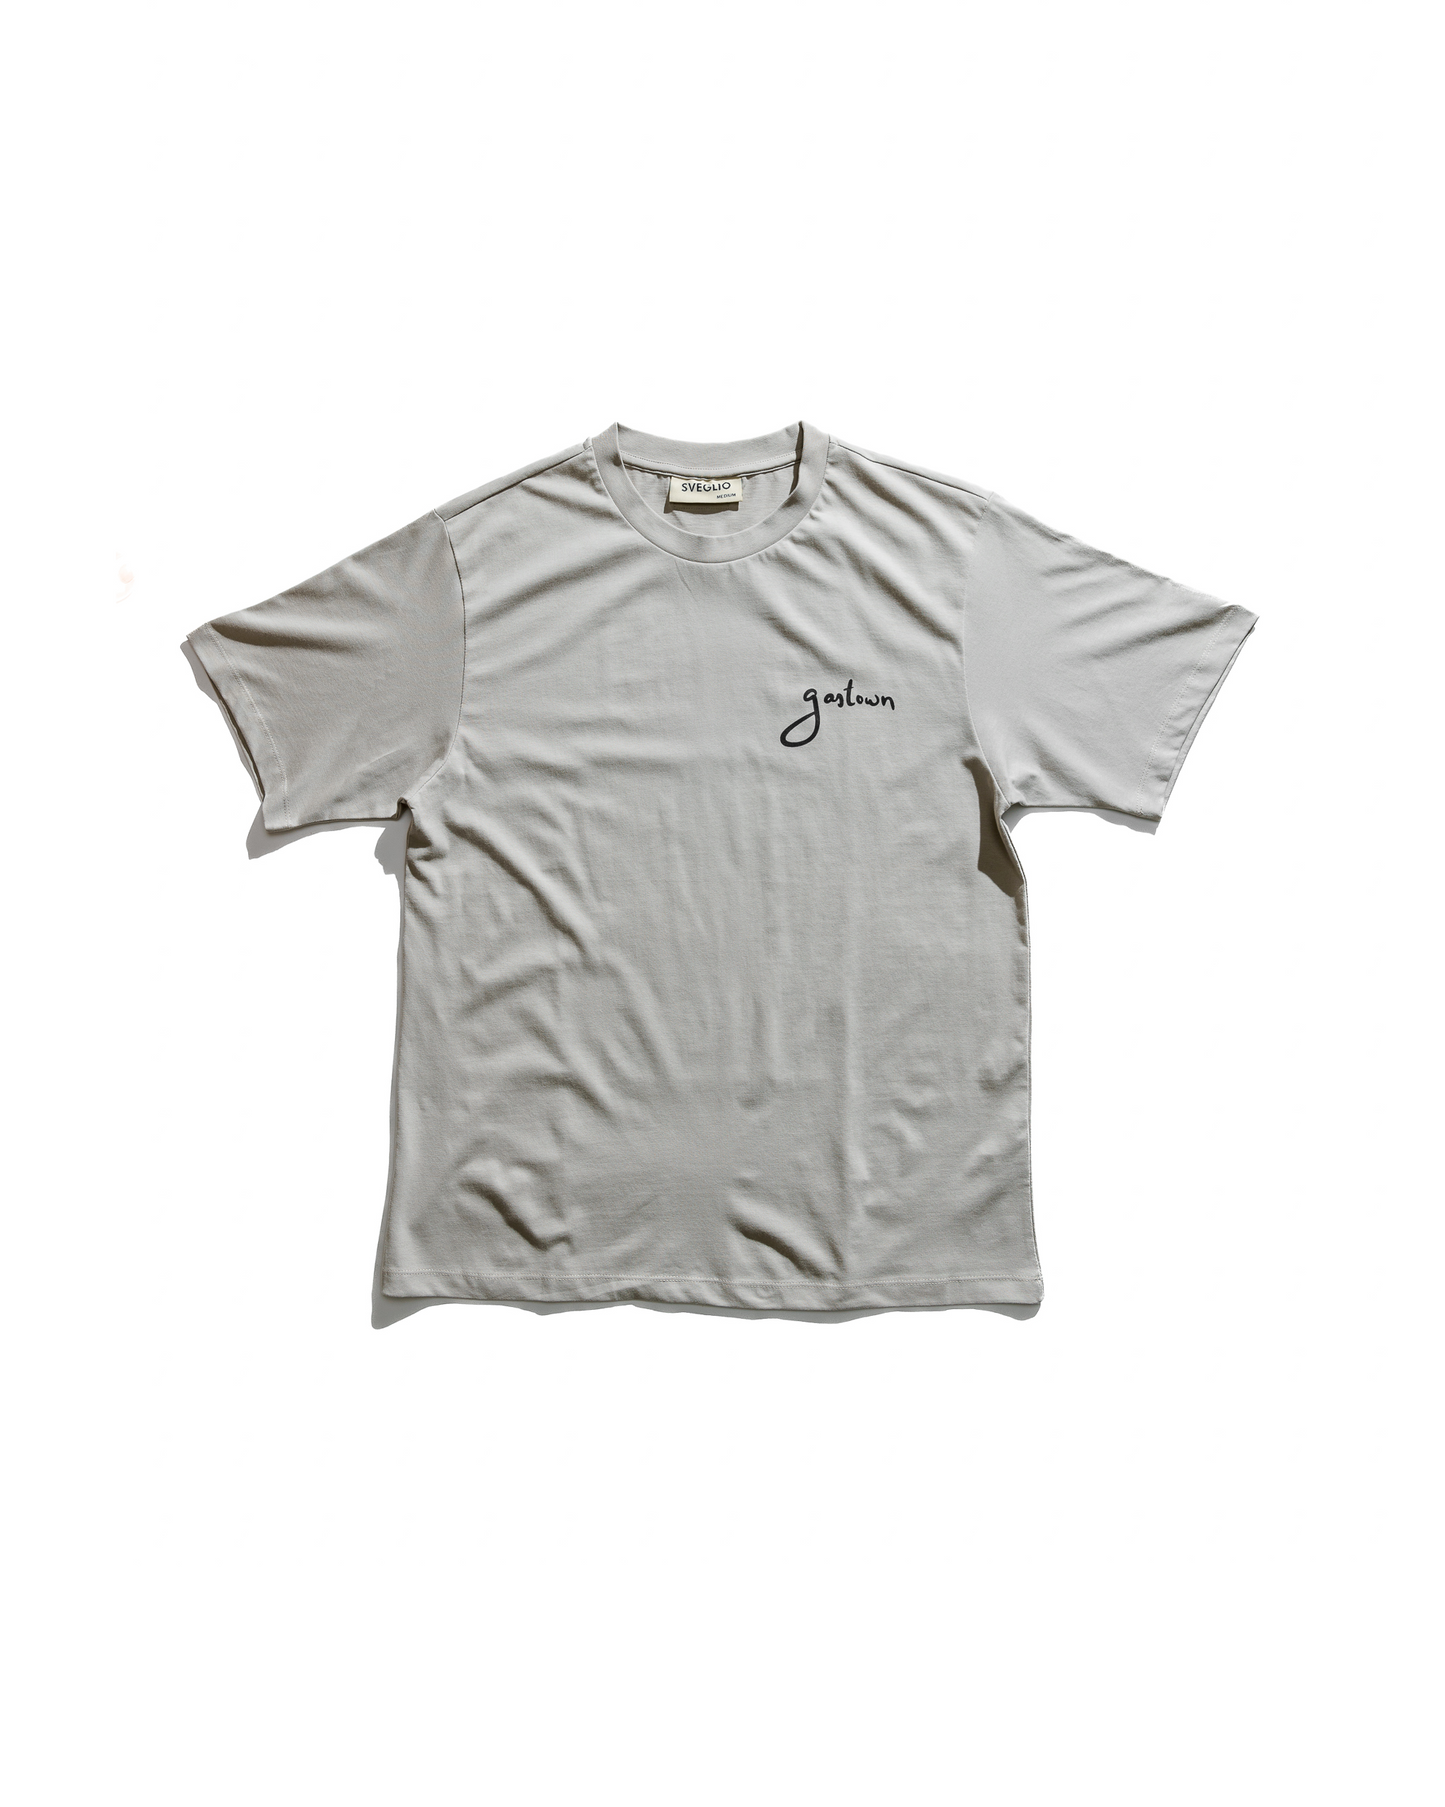 Gastown t-shirt - Stone Grey